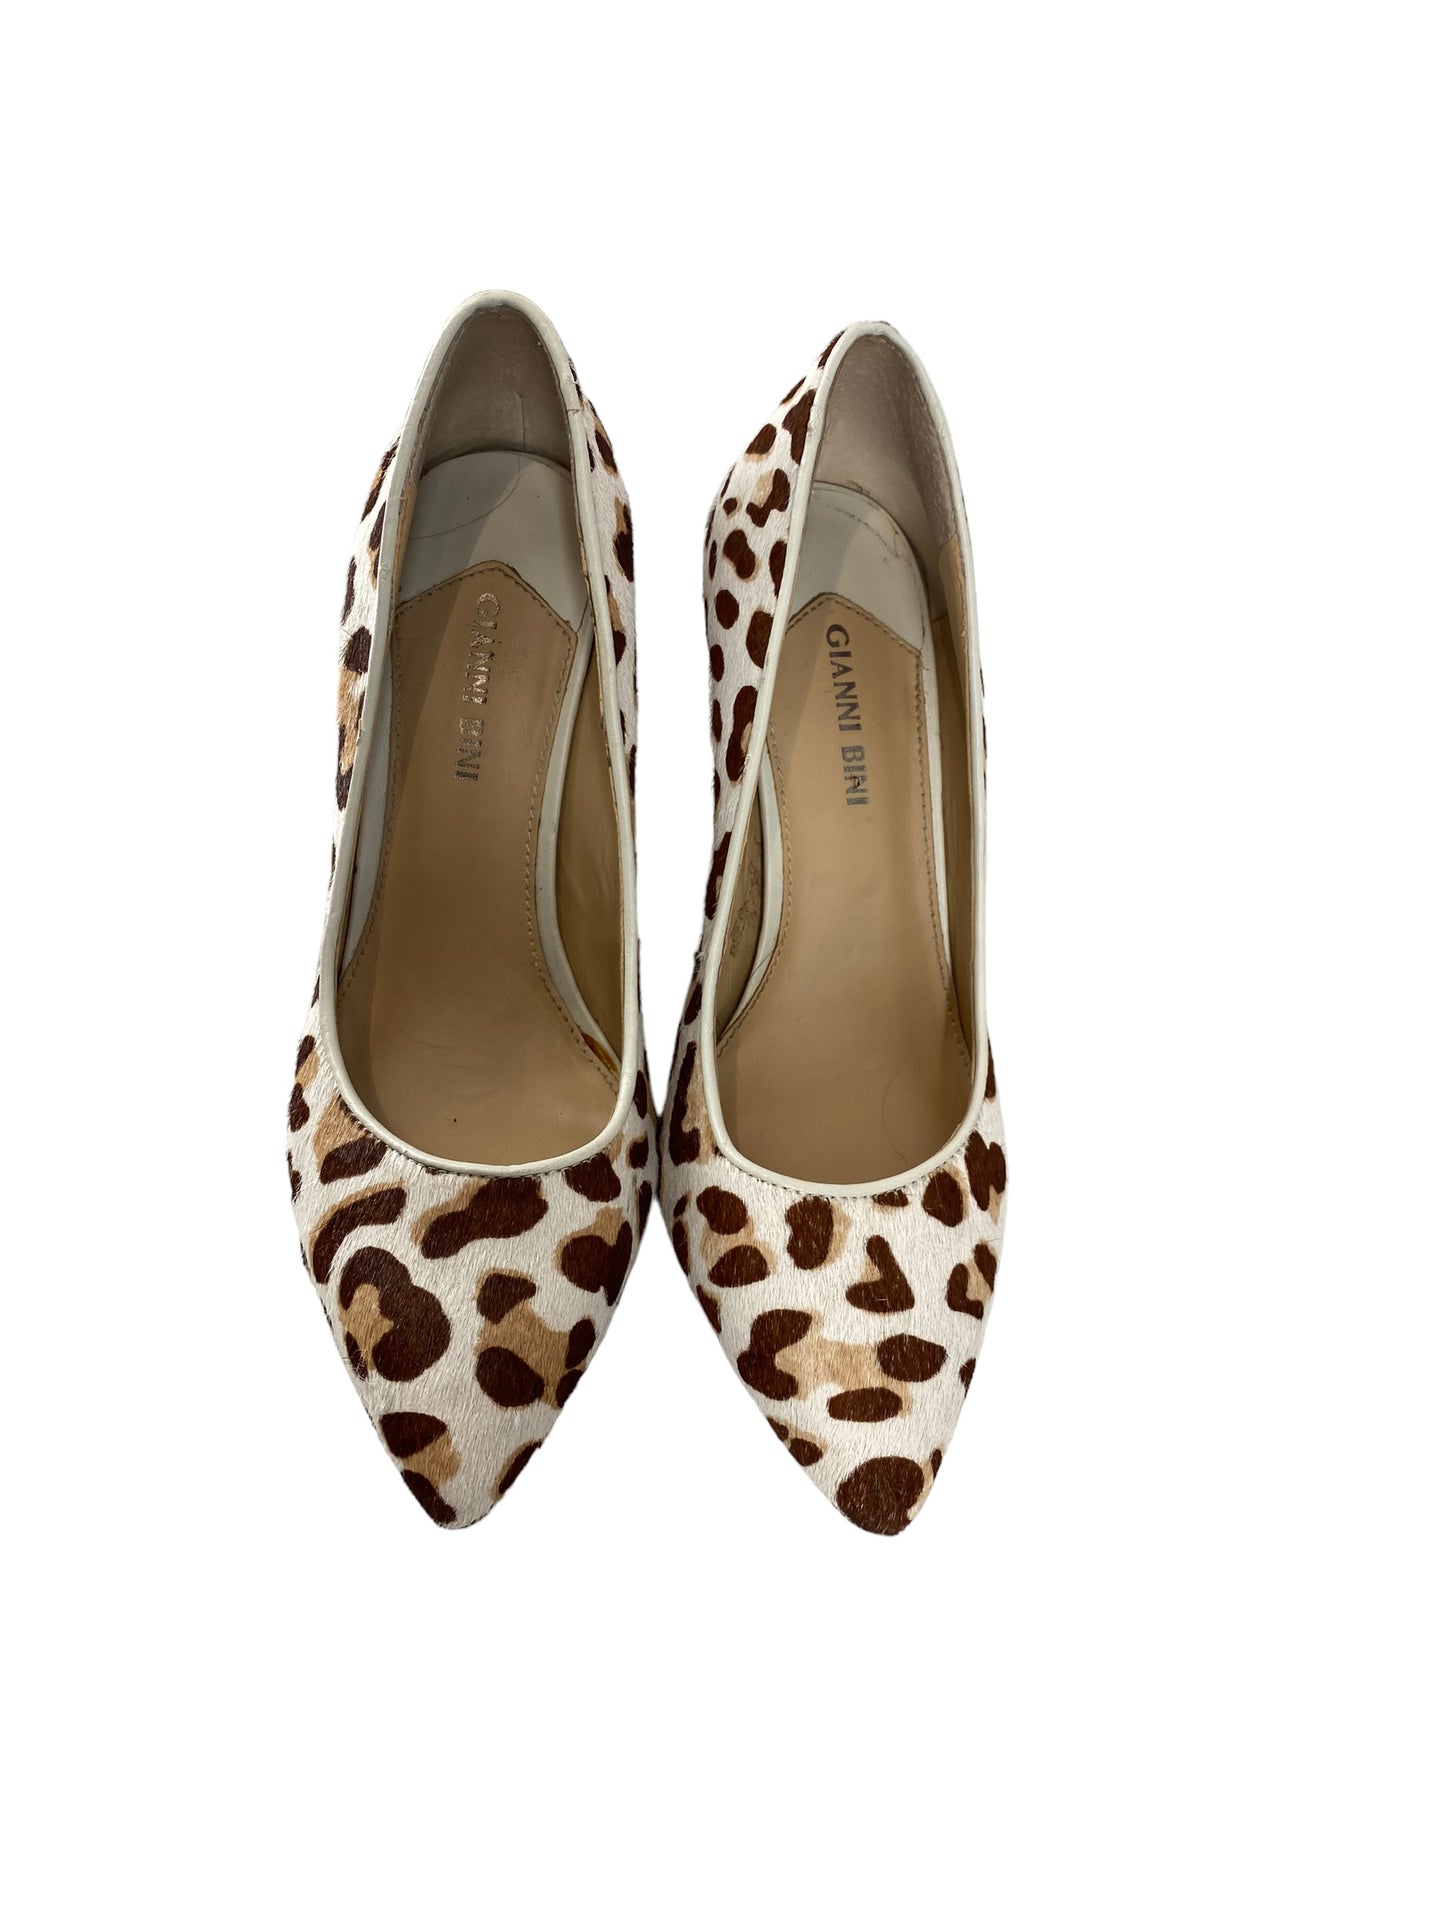 Shoes Heels Stiletto By Gianni Bini  Size: 8